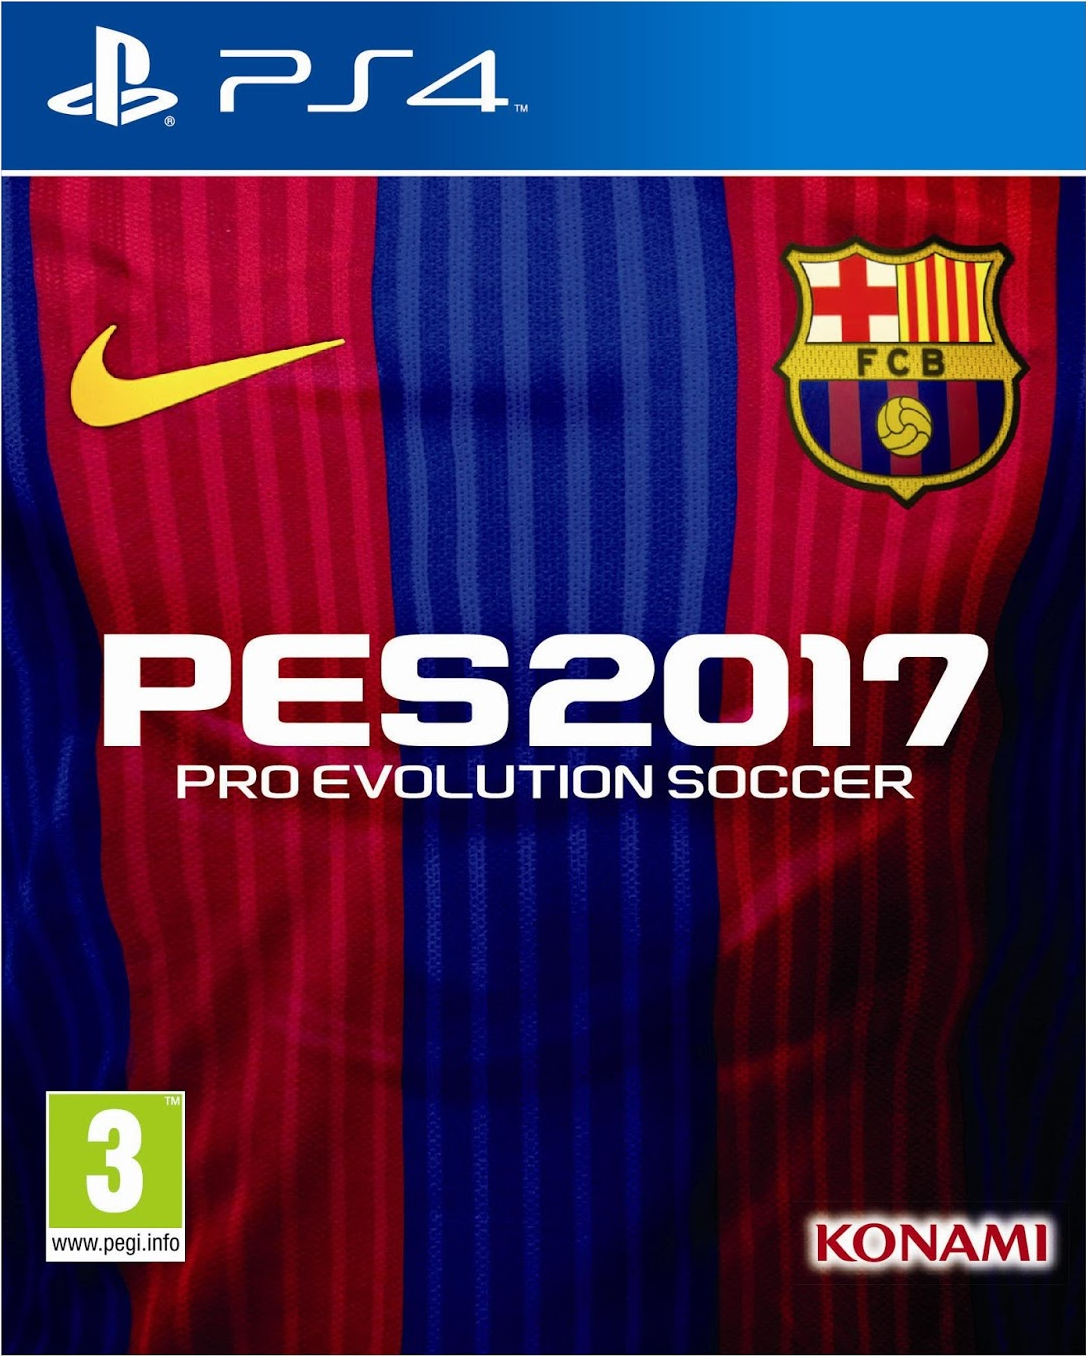 Pro Evolution Soccer 2017 Barcelona Edition (PS4), Konami